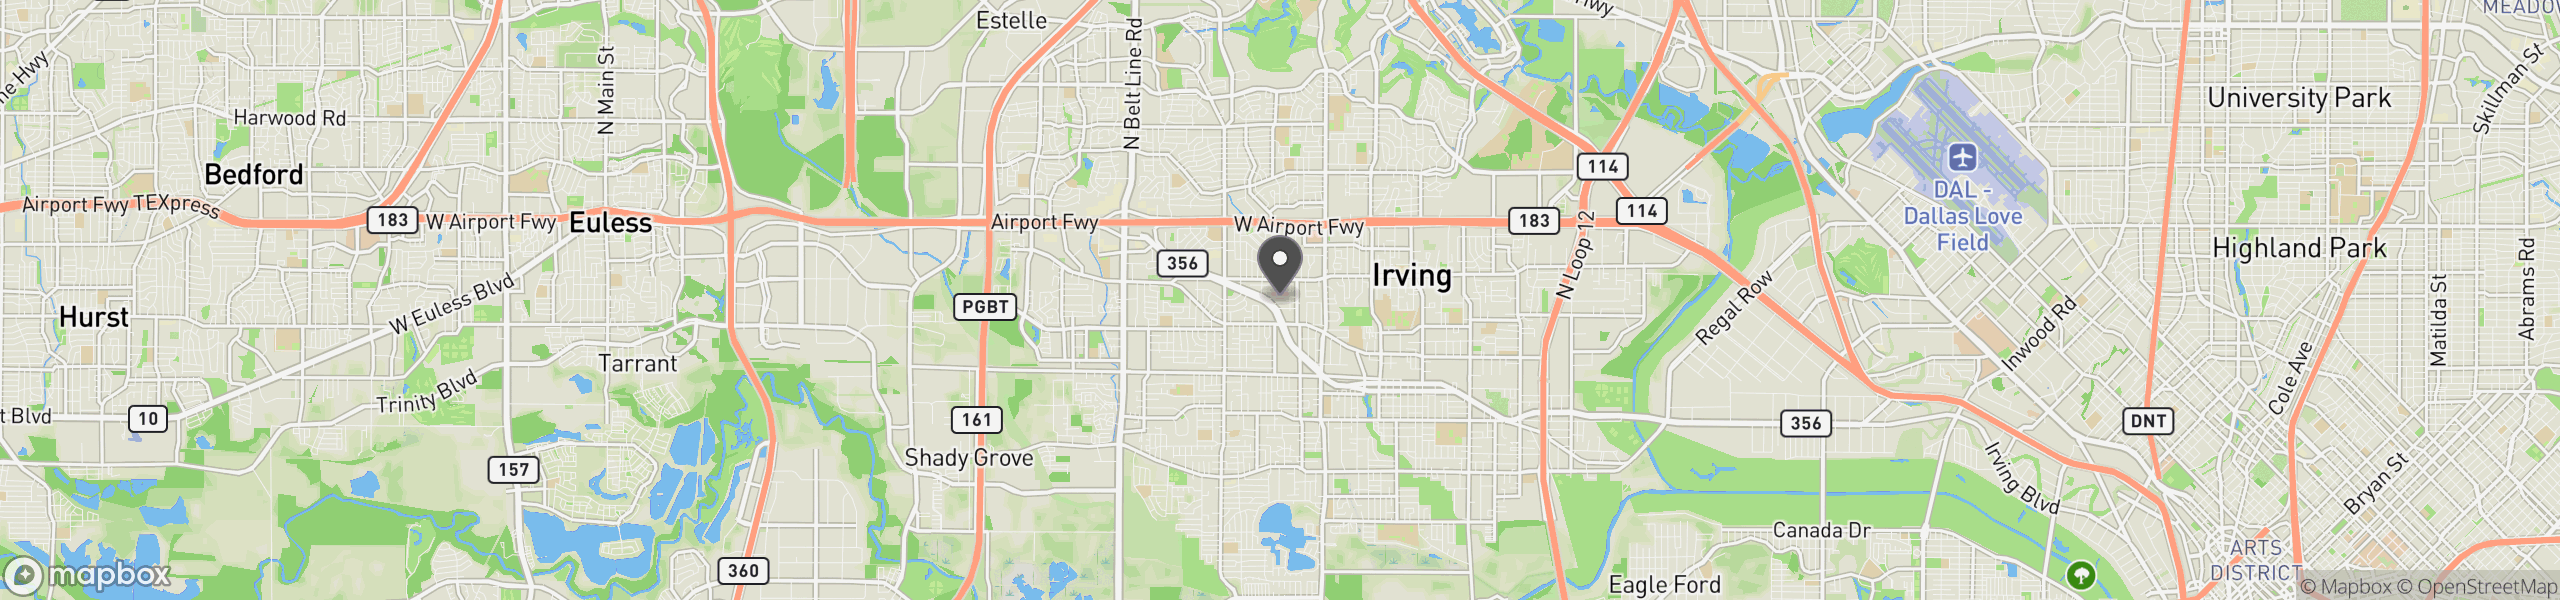 Irving, TX 75061